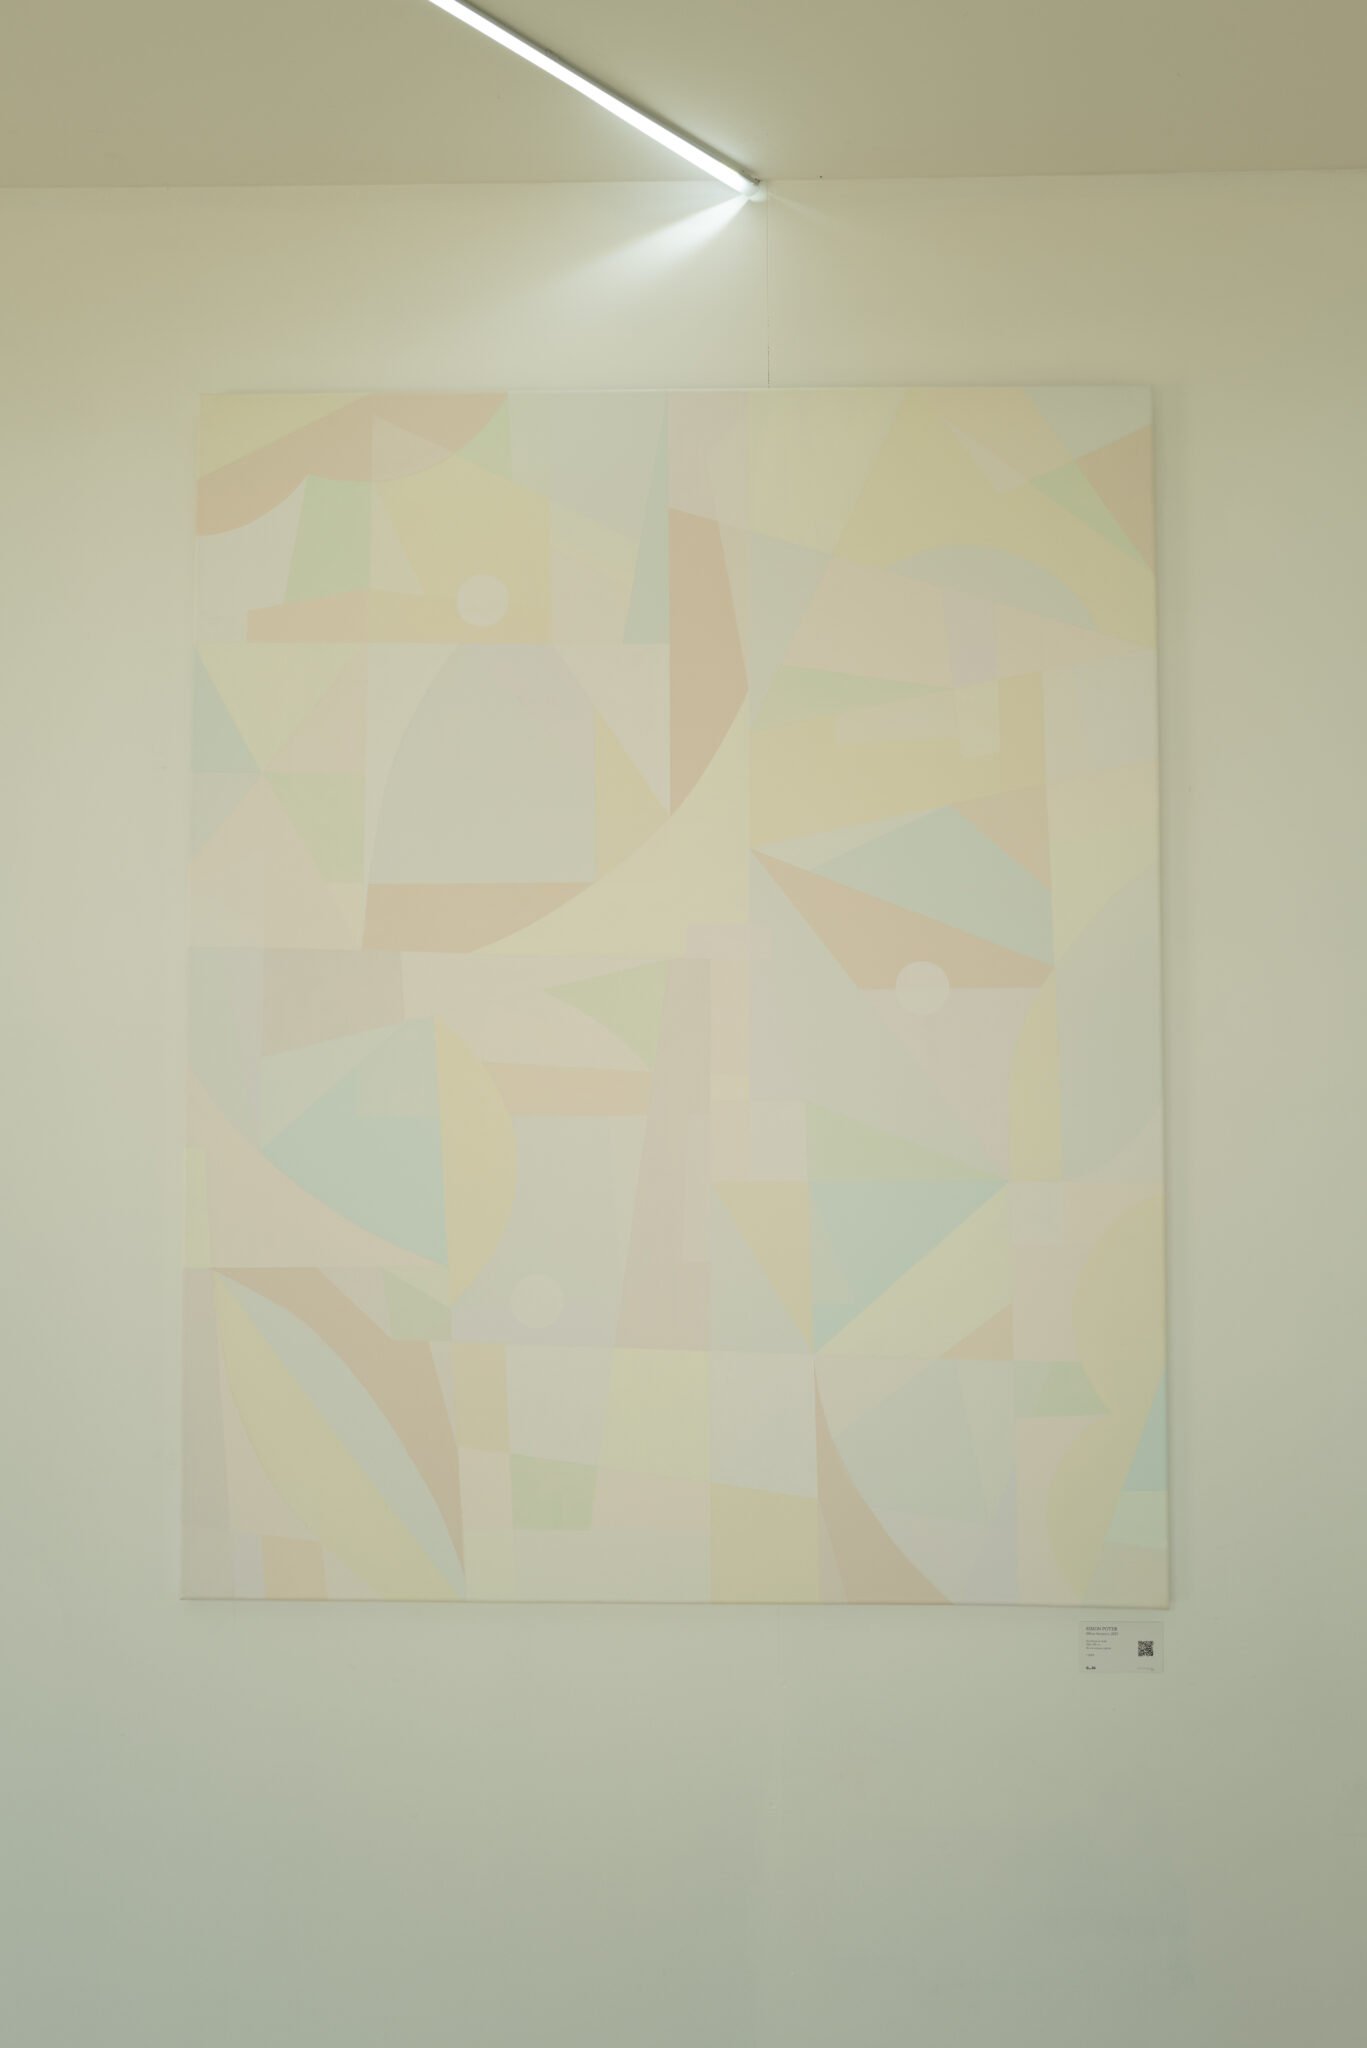 hatchikian-gallery-quai36-exposition-jumpincolors-white-variation-simon-poter